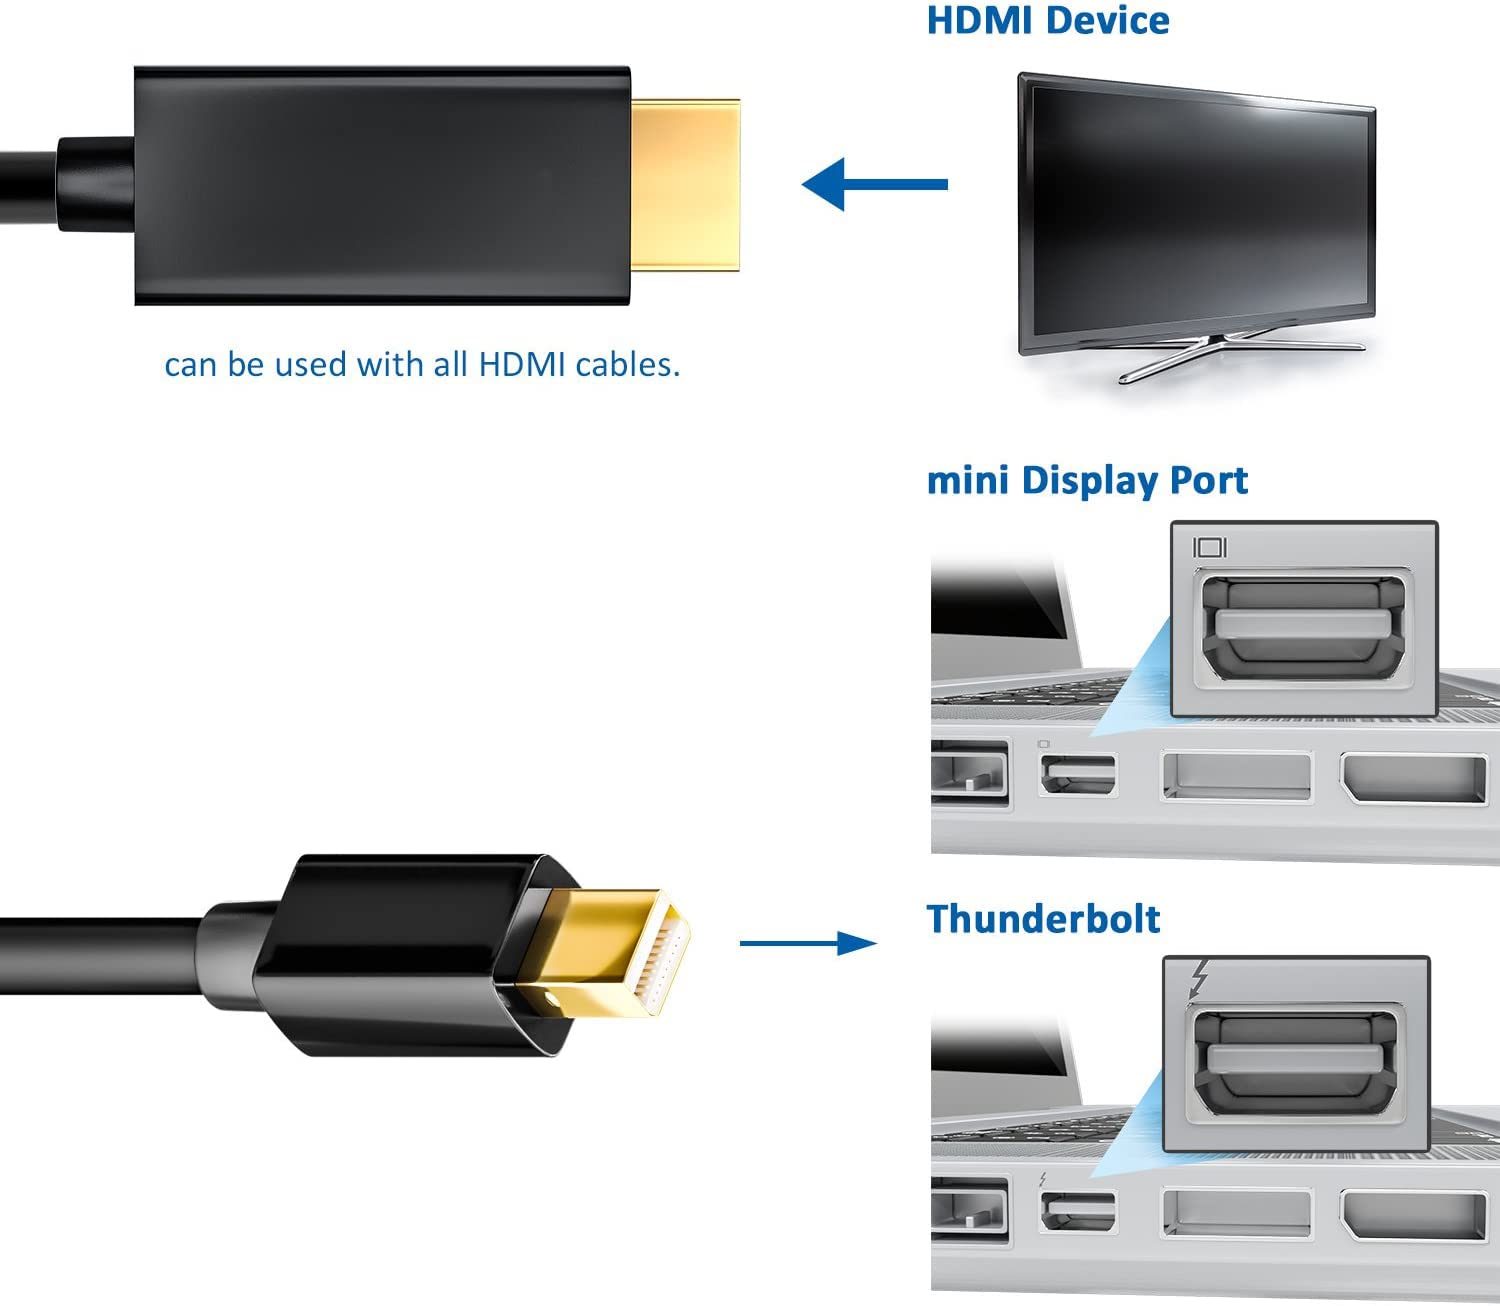 mDP2HD430-18-I | Câble Mini DisplayPort vers HDMI de 1,8 m - Vidéo 4K 30Hz